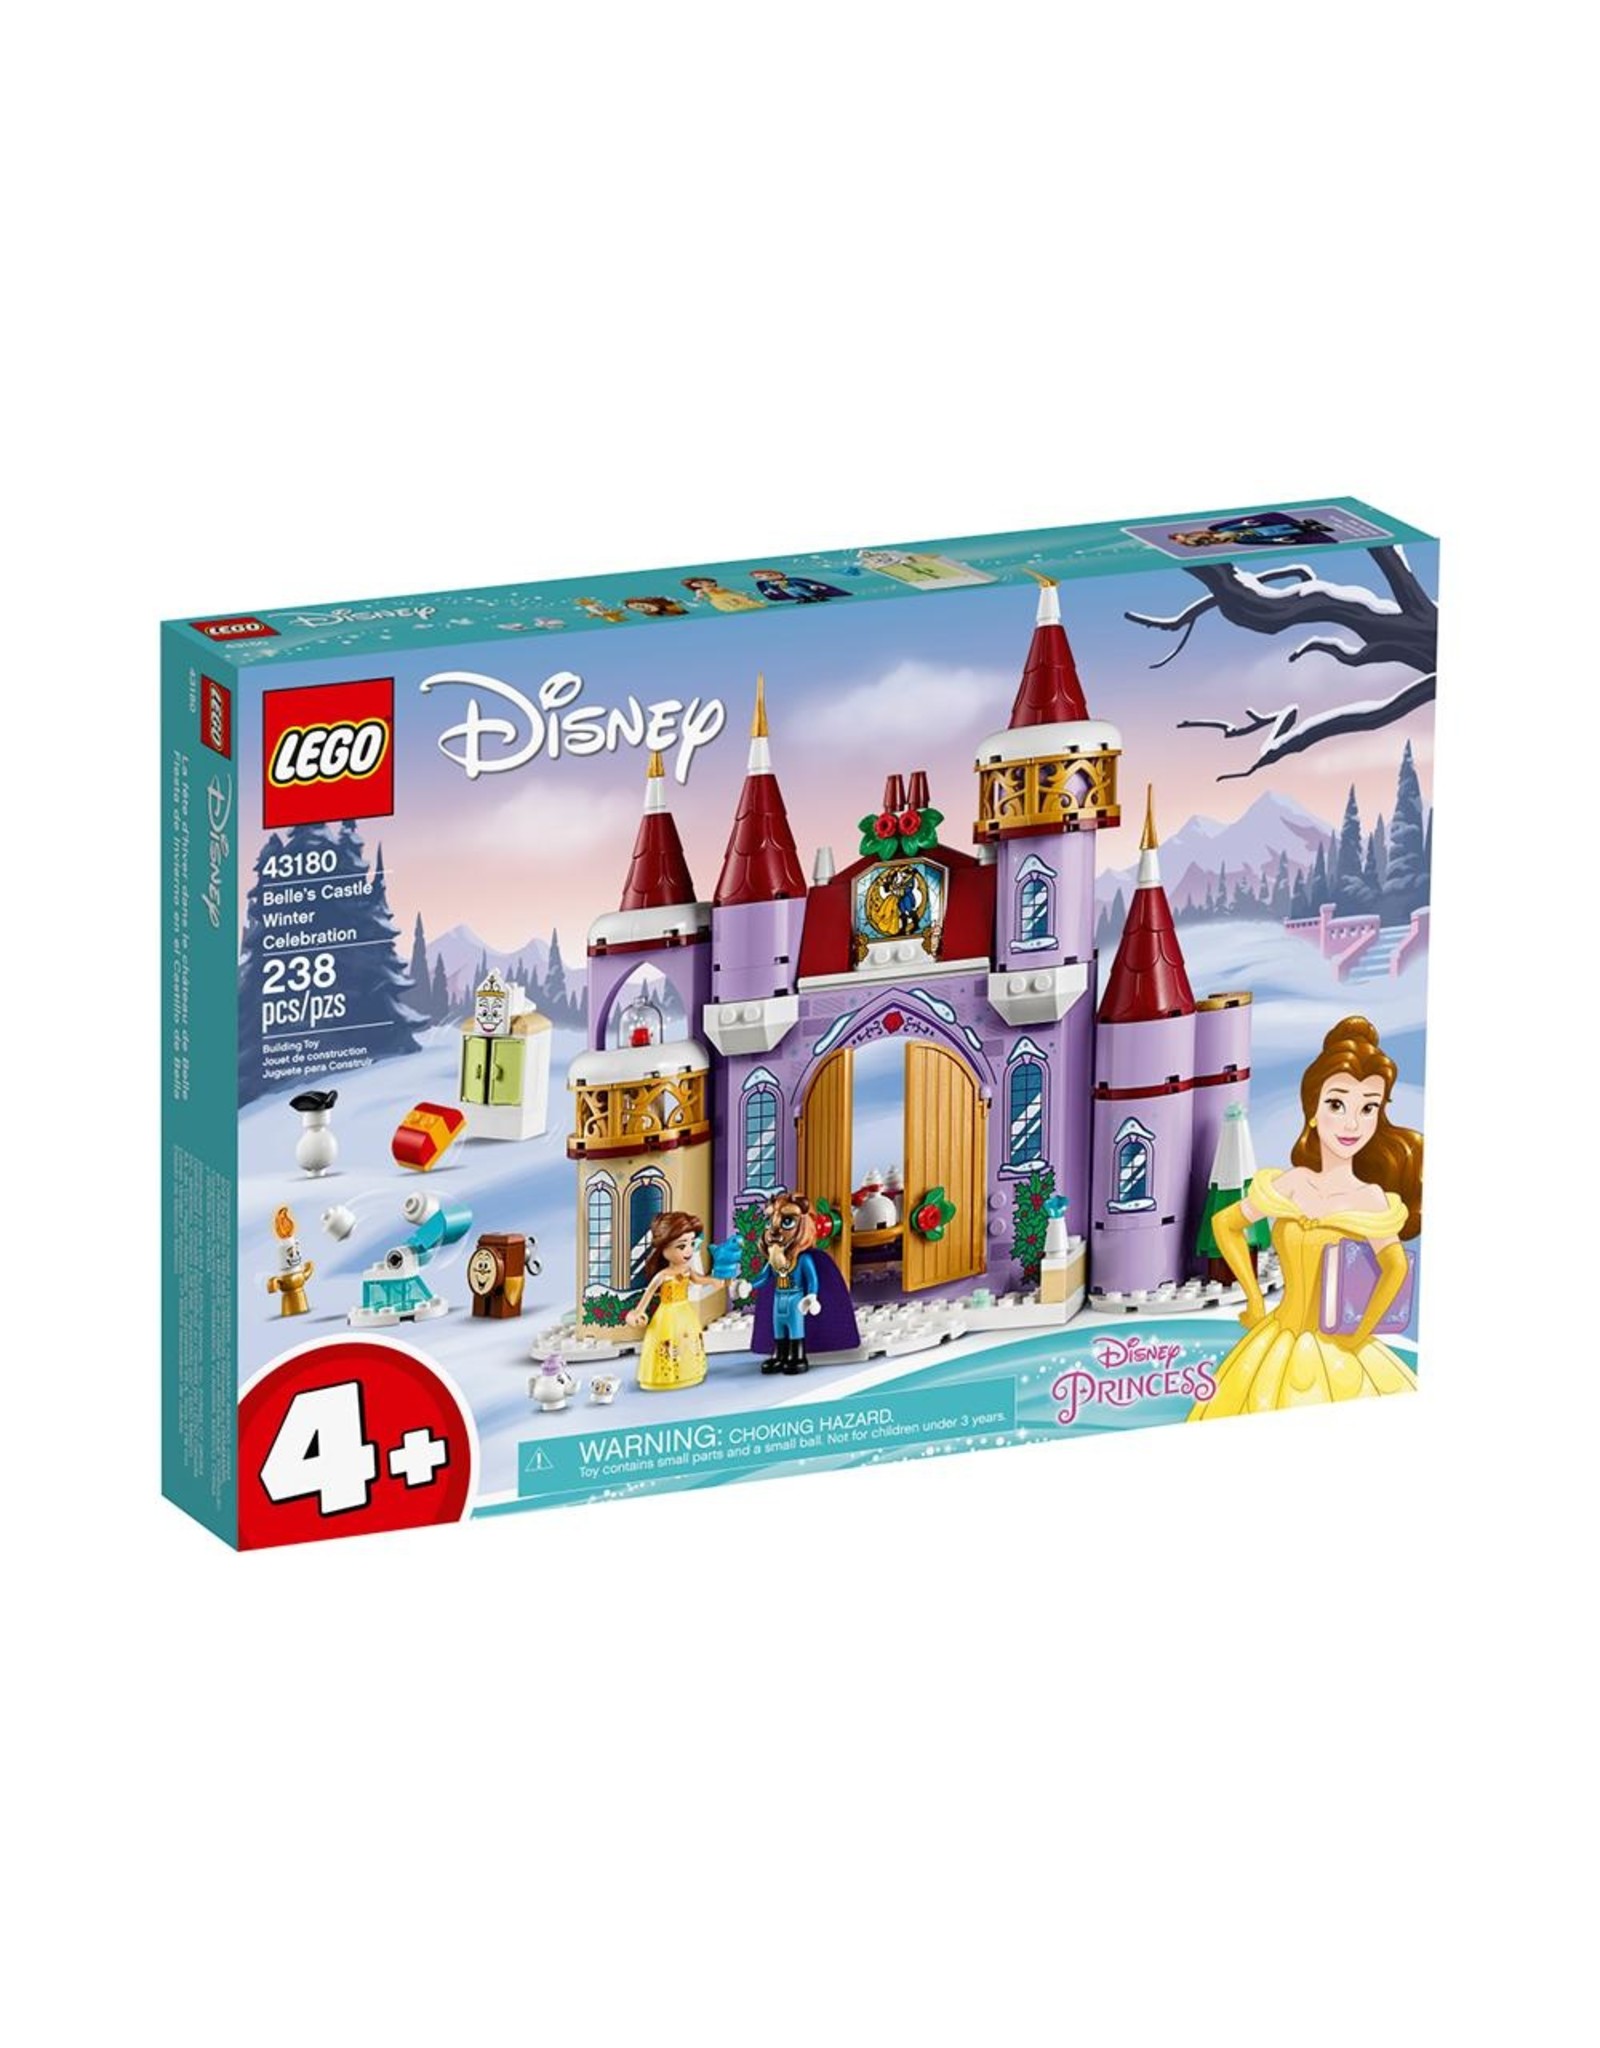 LEGO Disney Princess  43180  Belle's Castle Winter Celebration